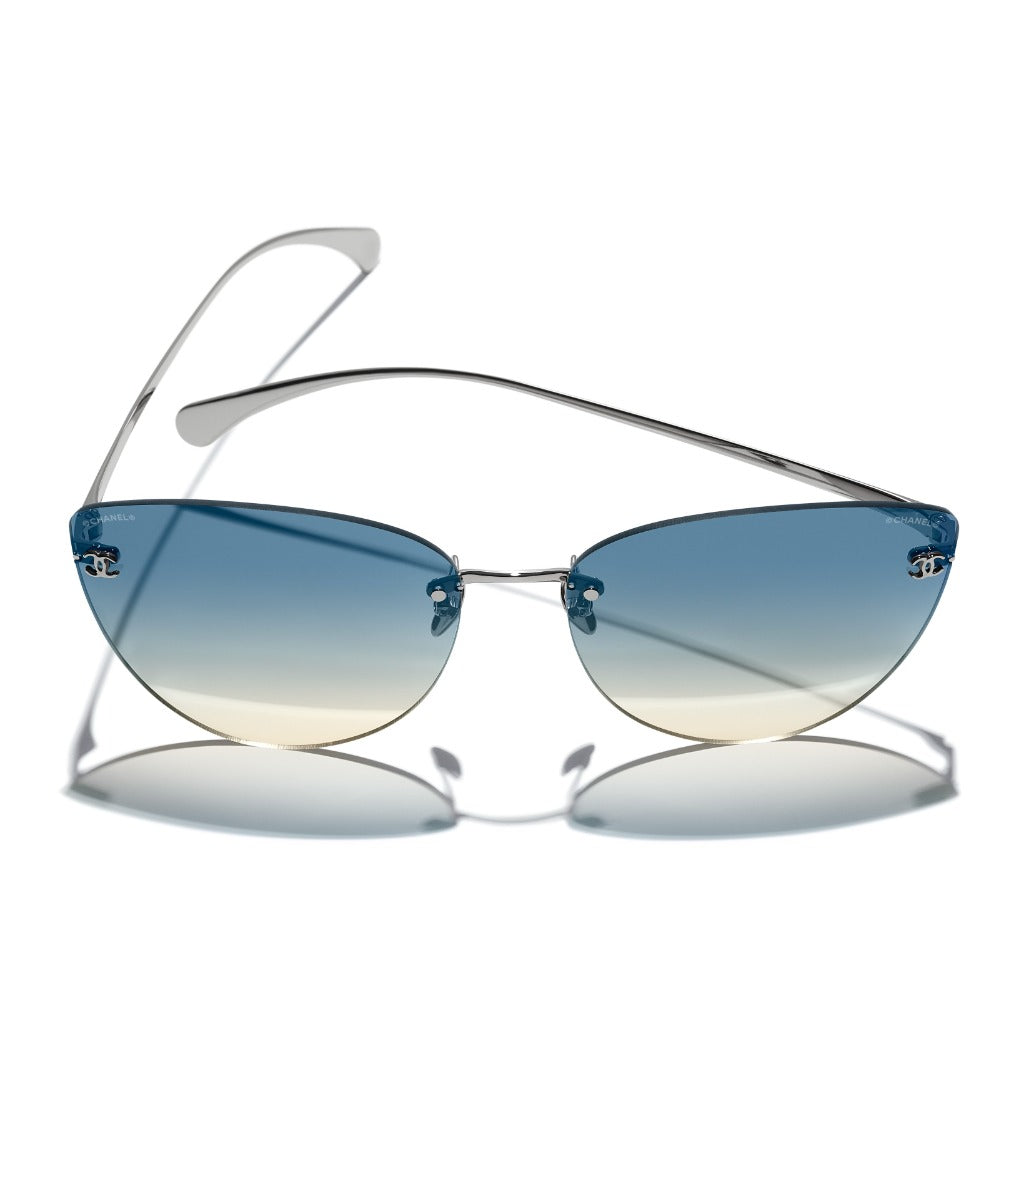 Chanel Cat Eye Sunglasses - Acetate and Tweed, Dark Tortoise - Polarized - UV Protected - Women's Sunglasses - 5513 C714/S9